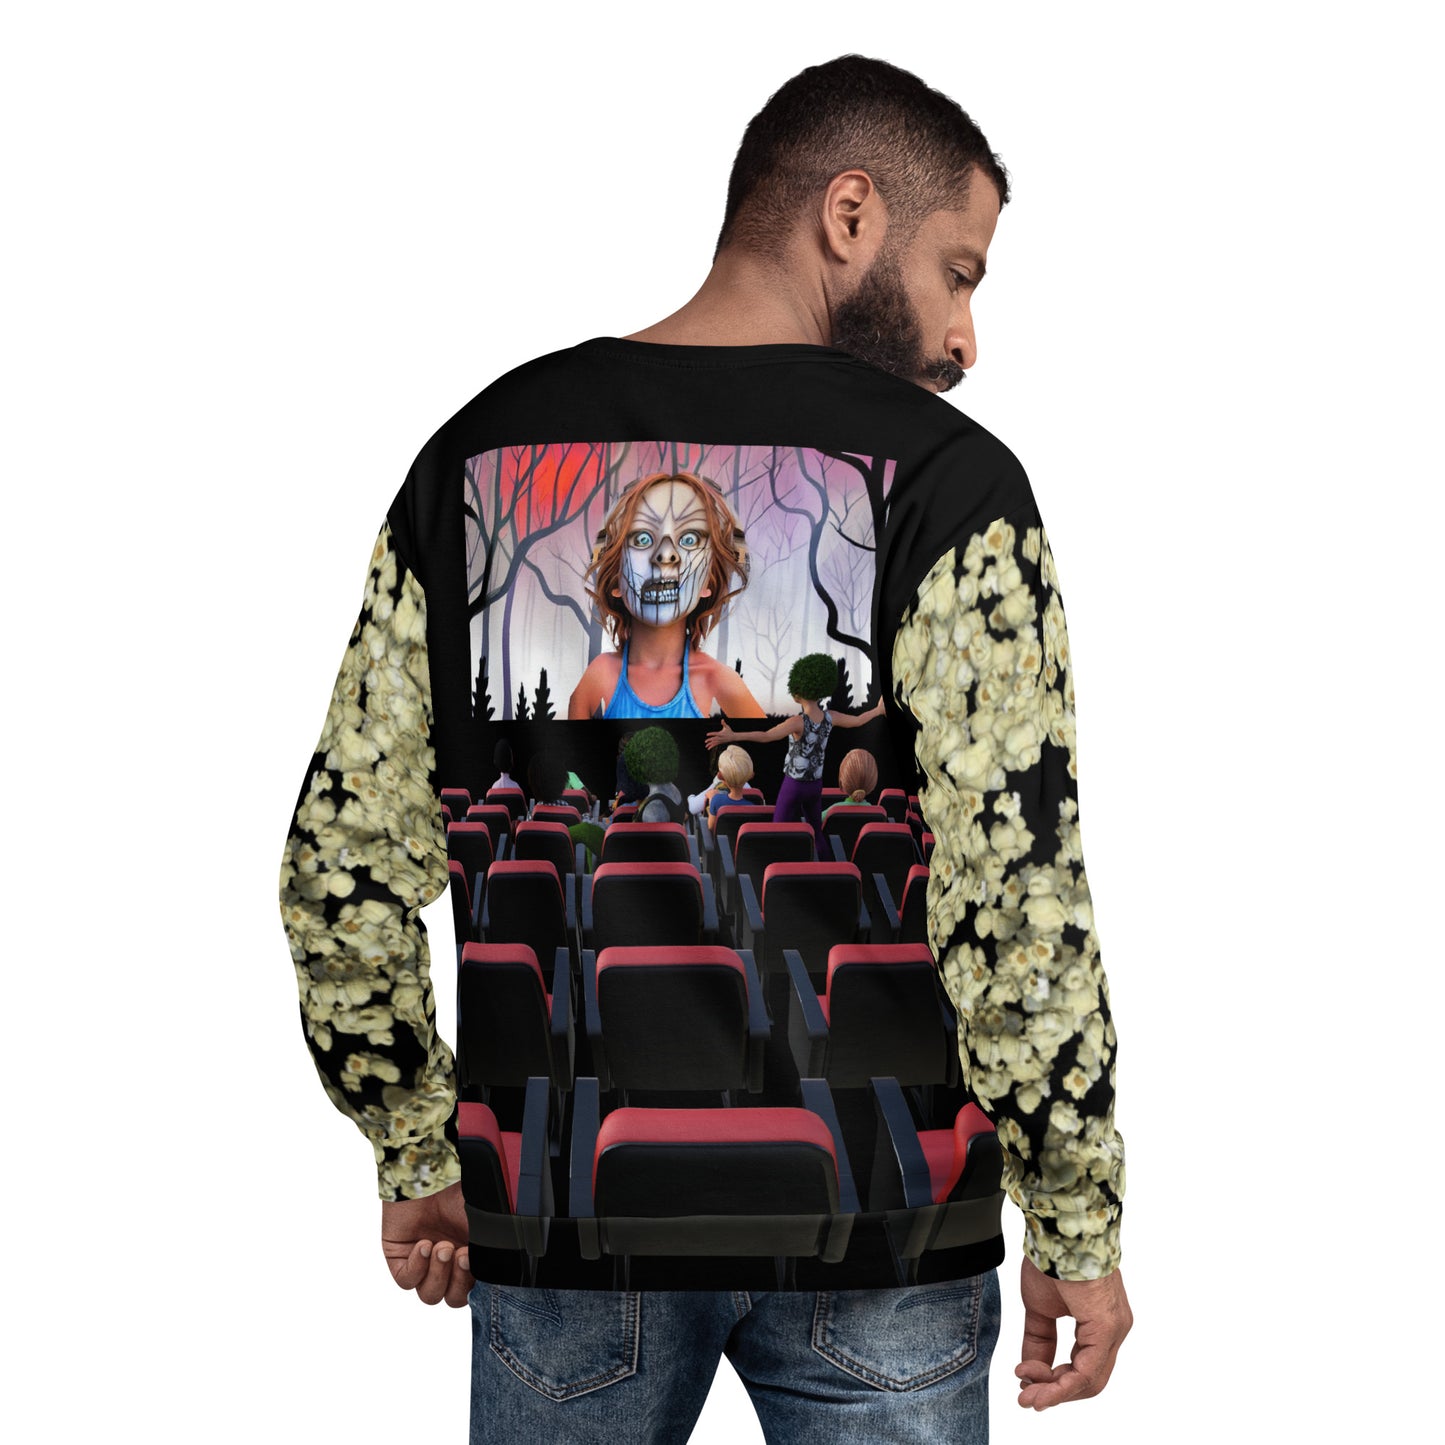 Movie Night with Clowns Sweatshirt